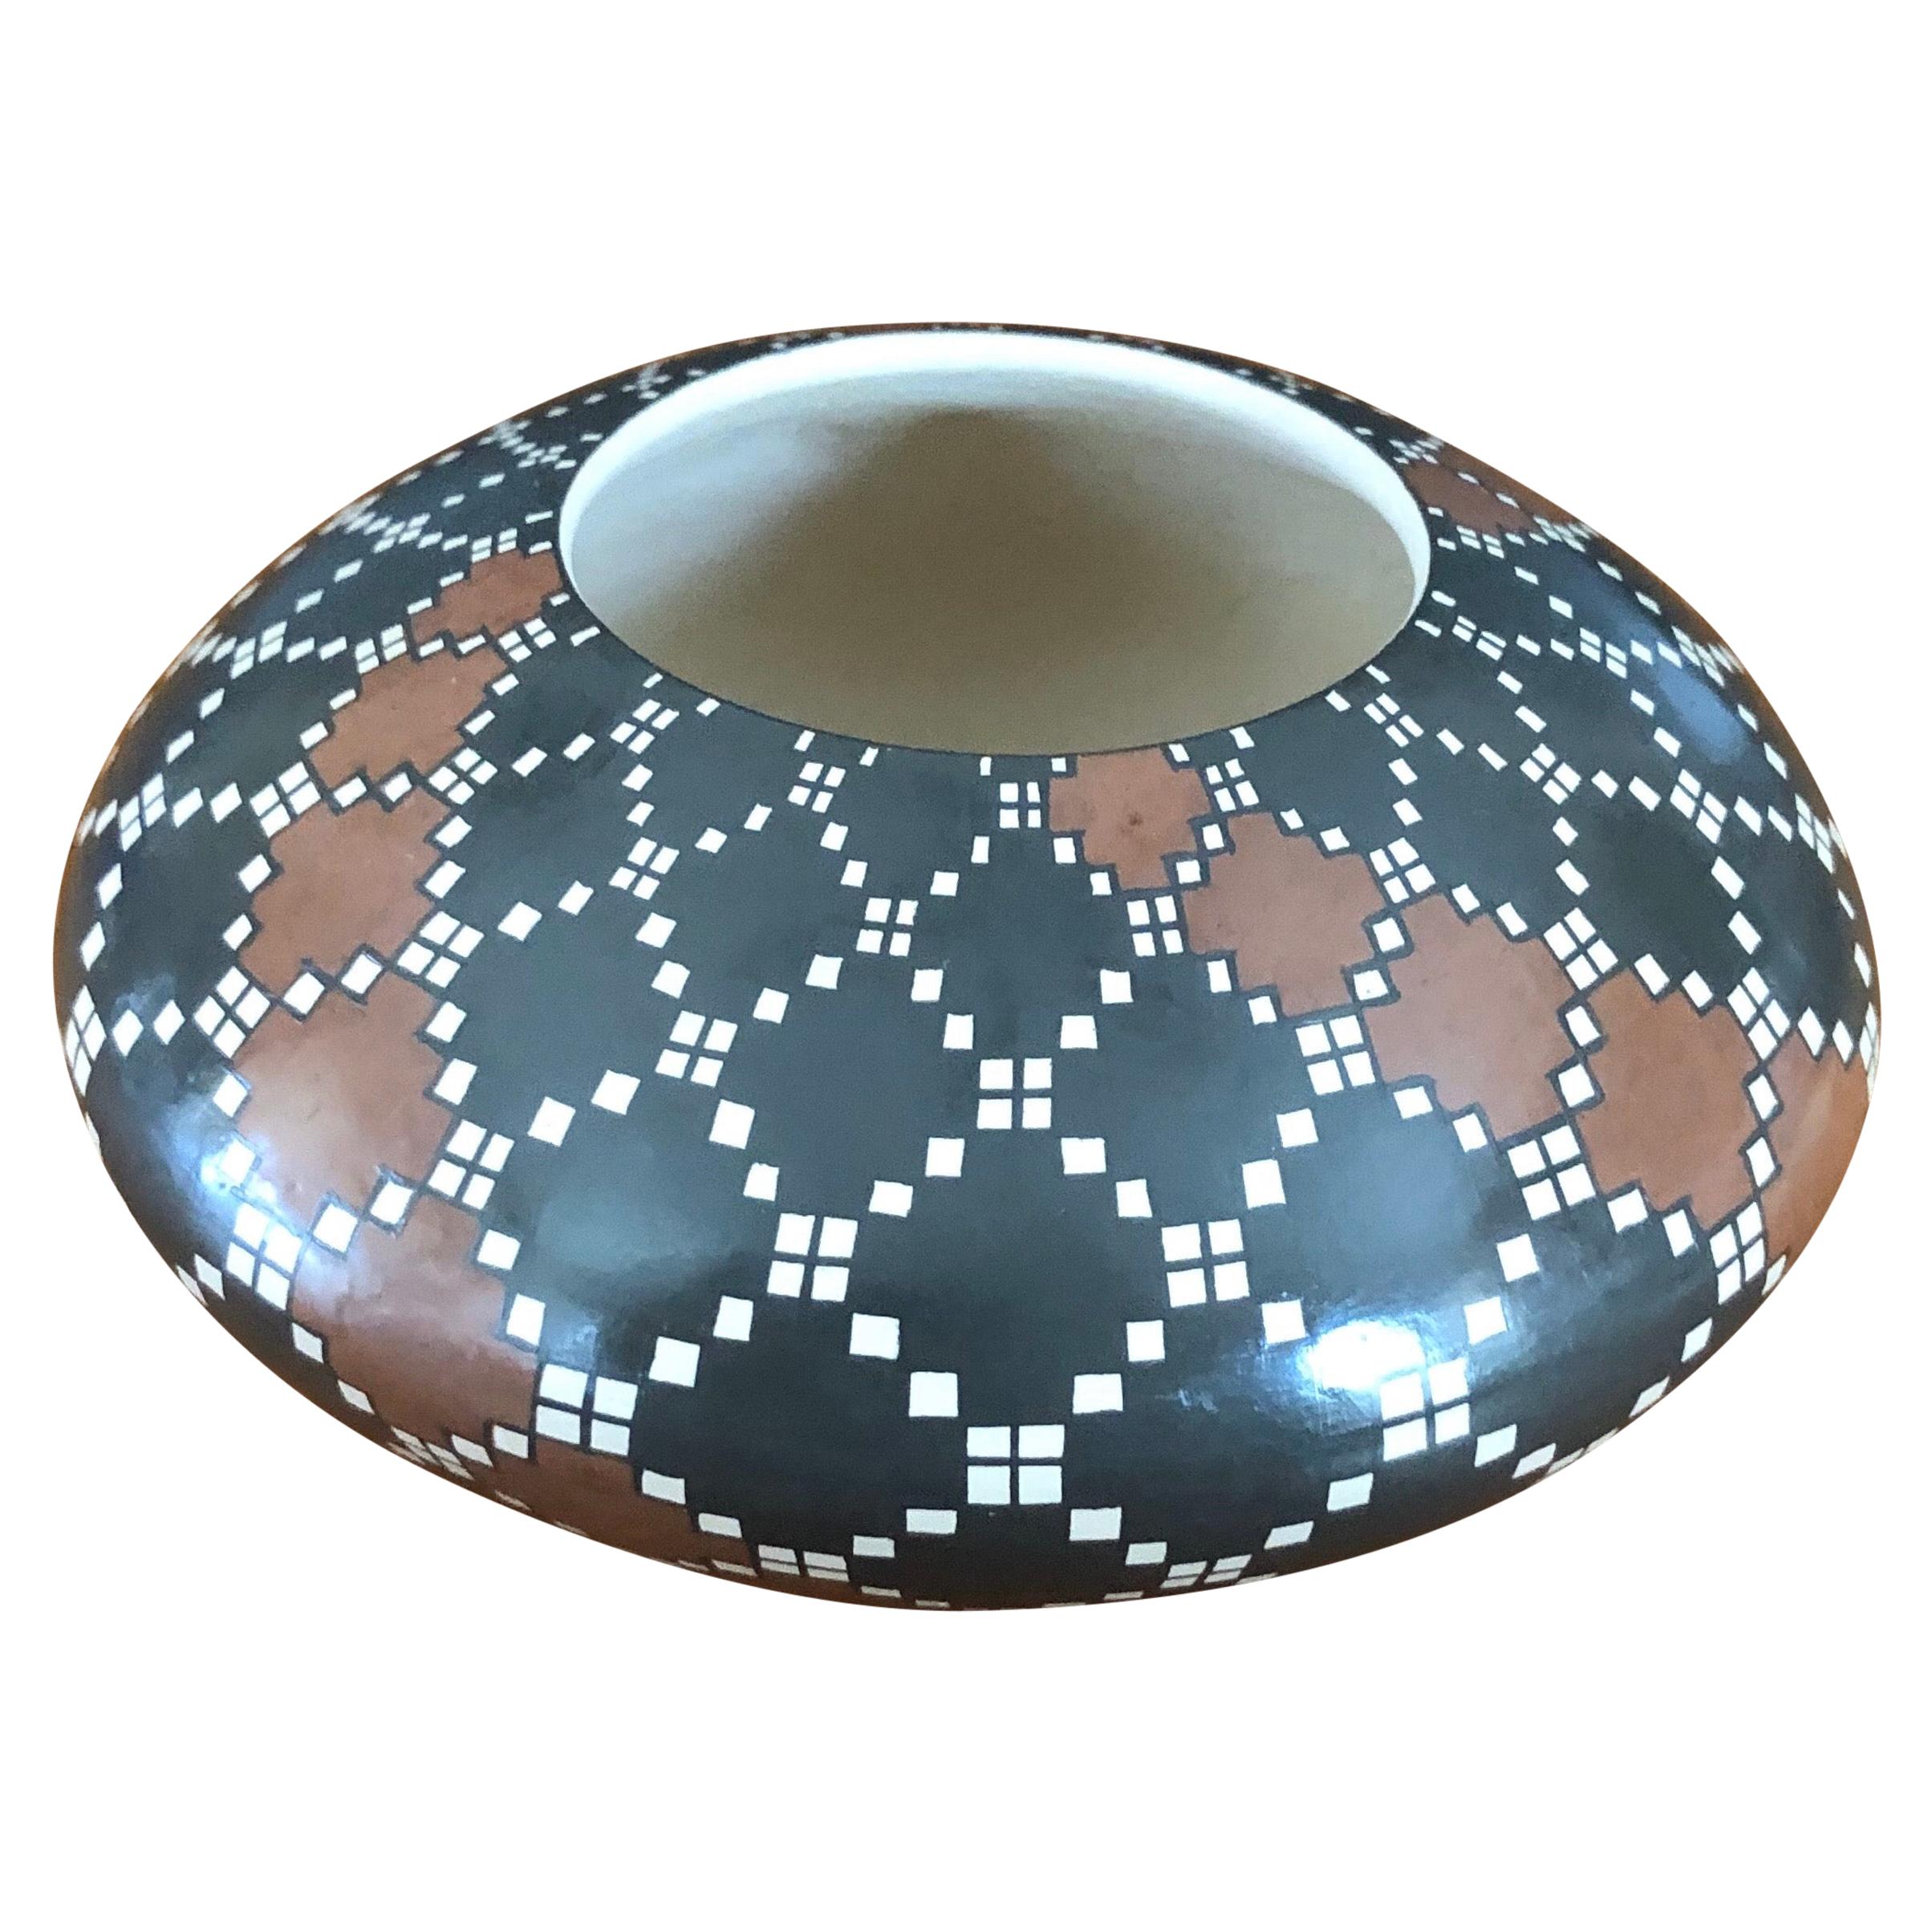 Mata Ortiz Geometric Pottery Vase by Juana Ledezma Vecoz For Sale